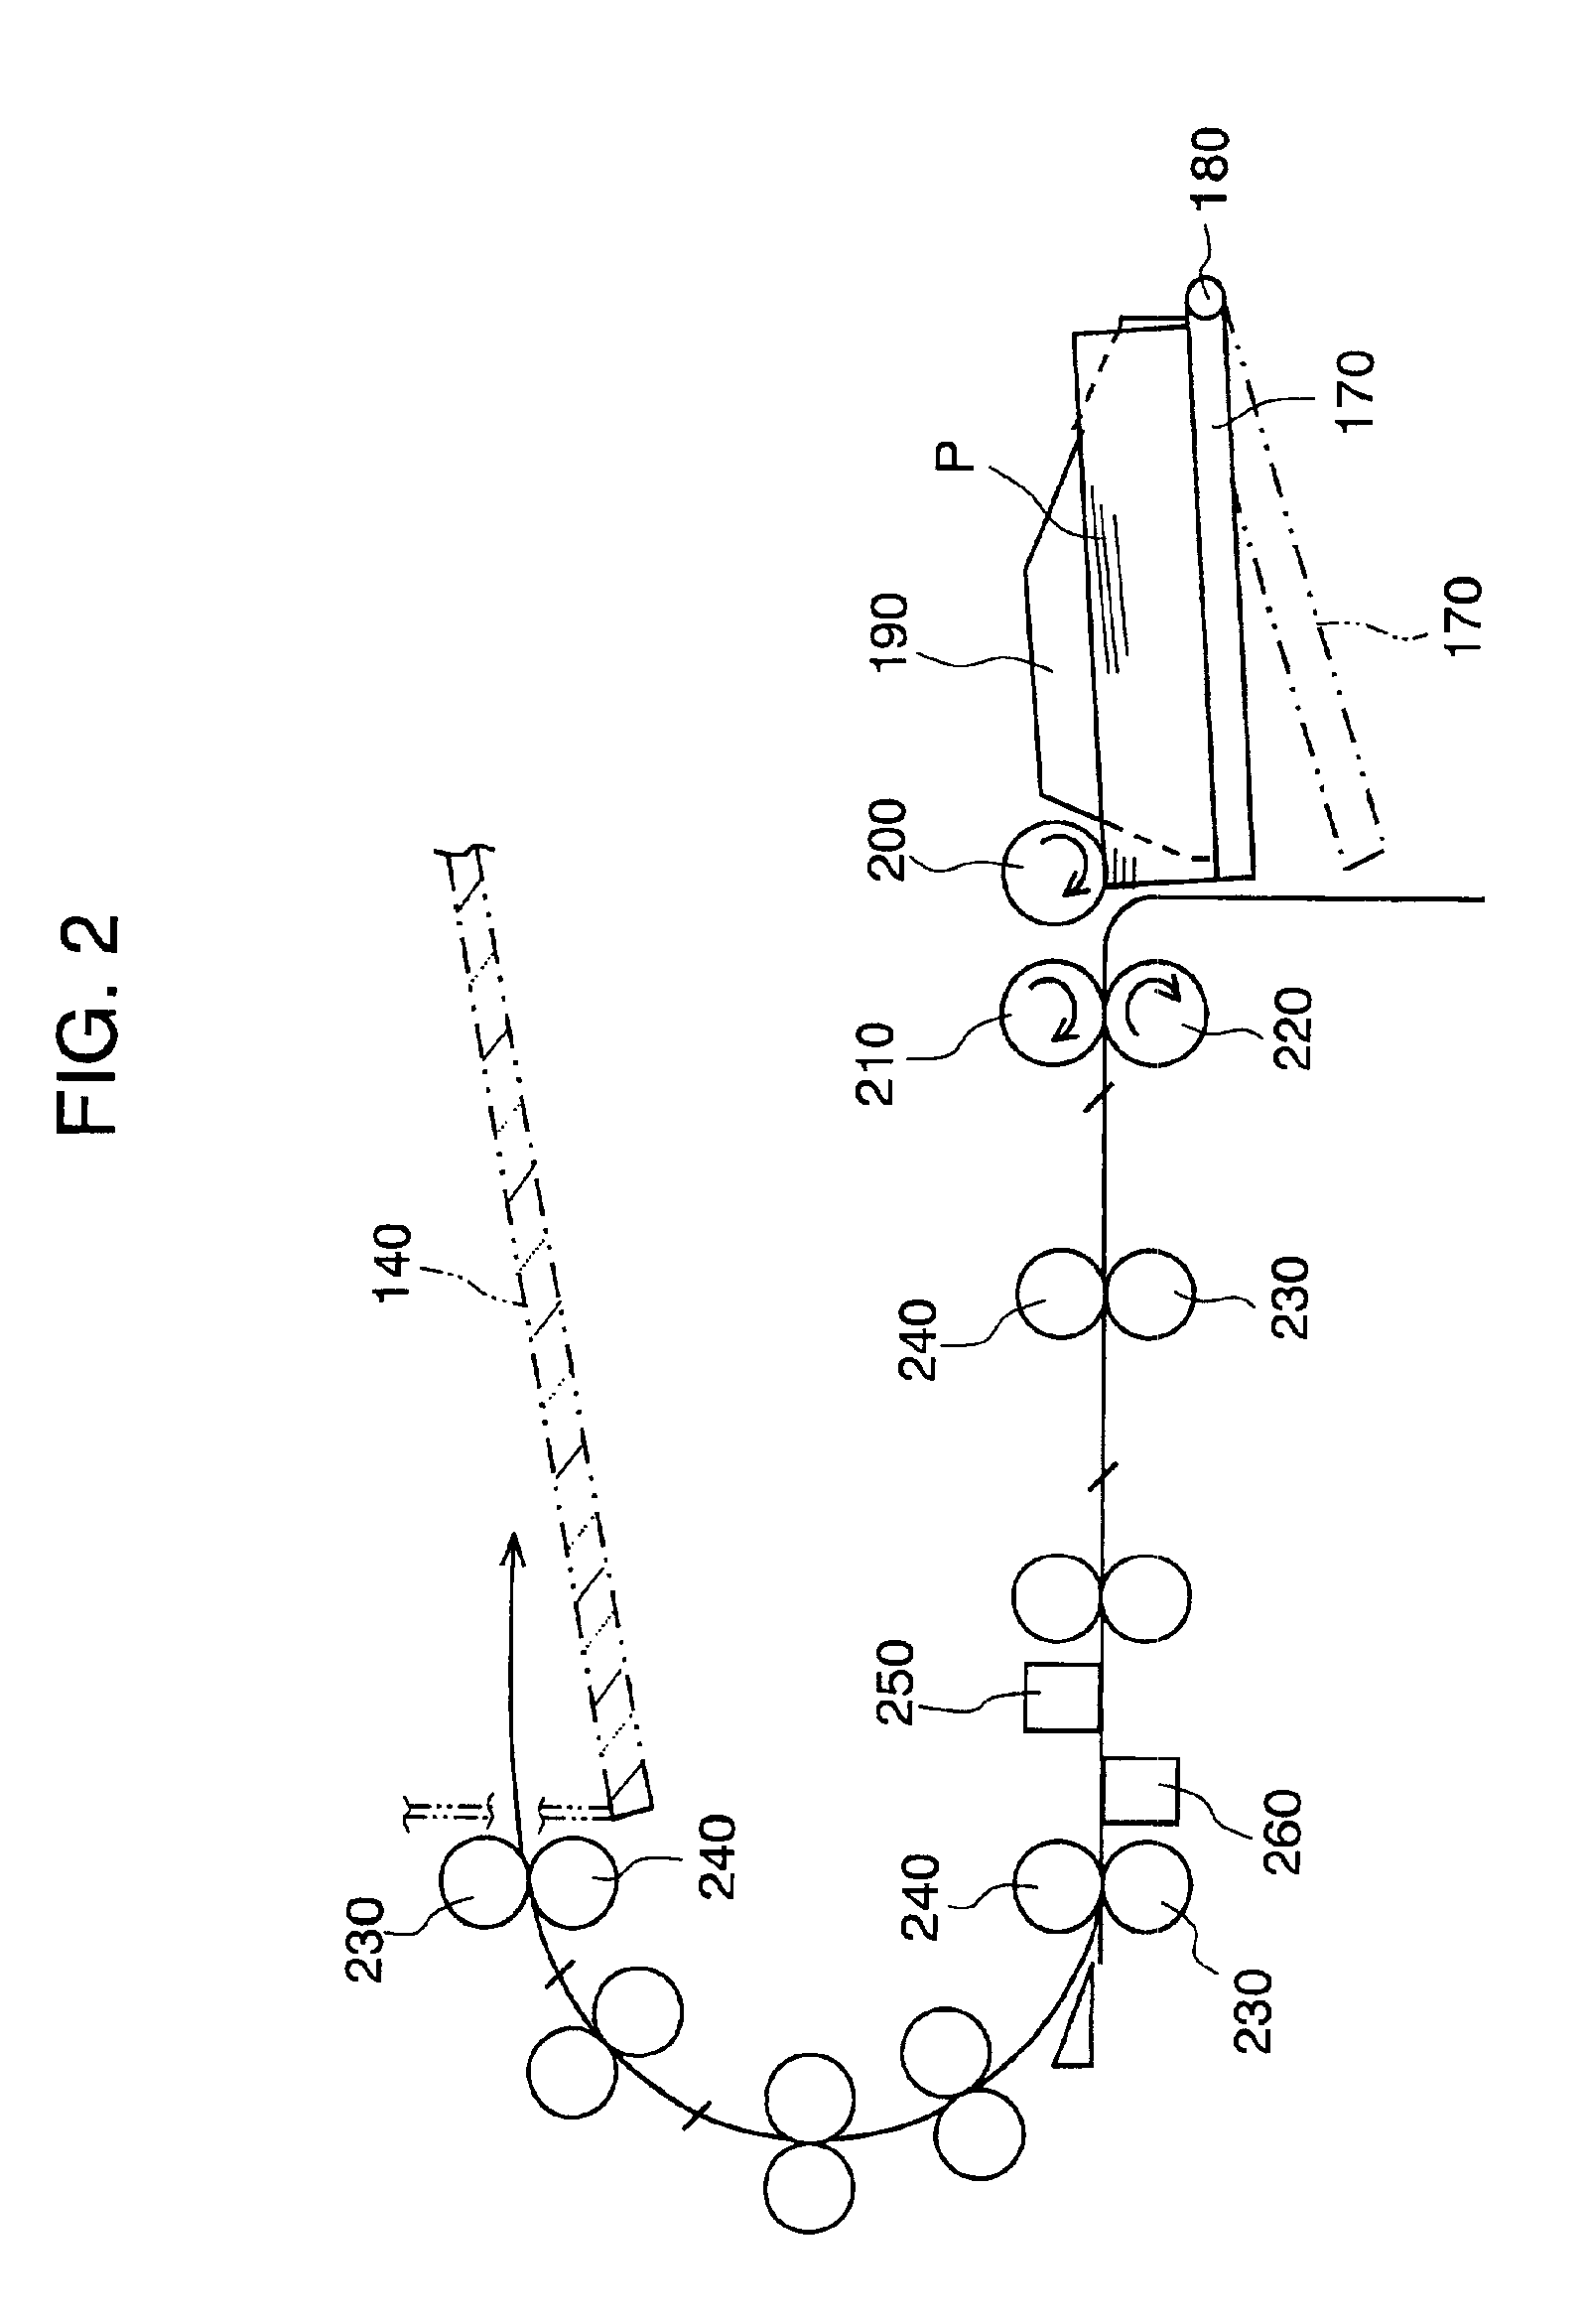 Sheet separation roller configuration